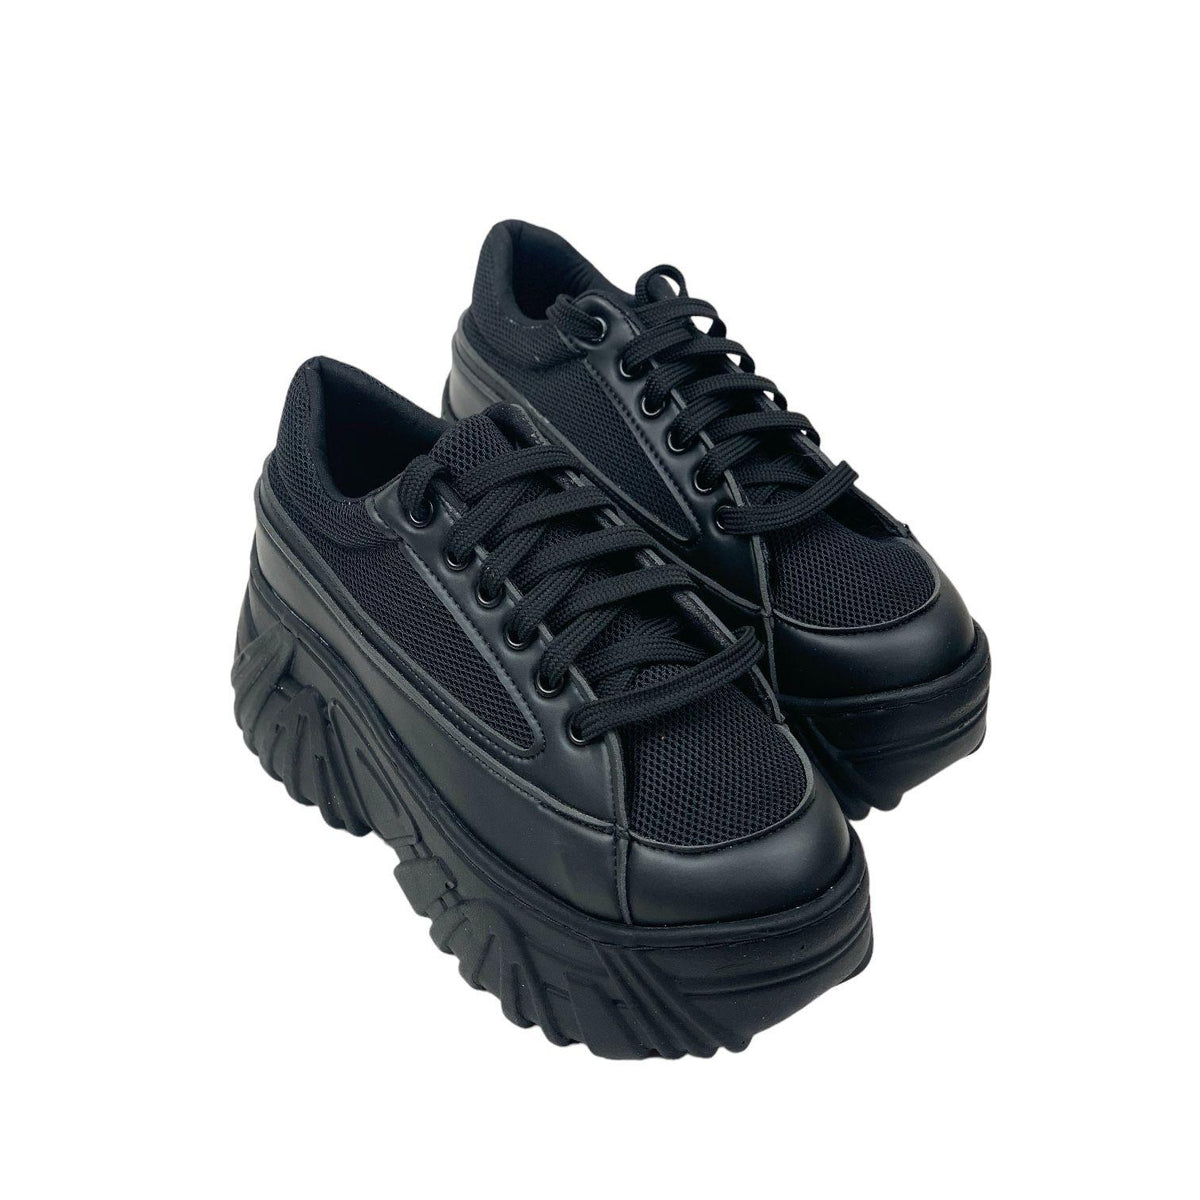 Women's shanny black high sole sneaker sports shoes